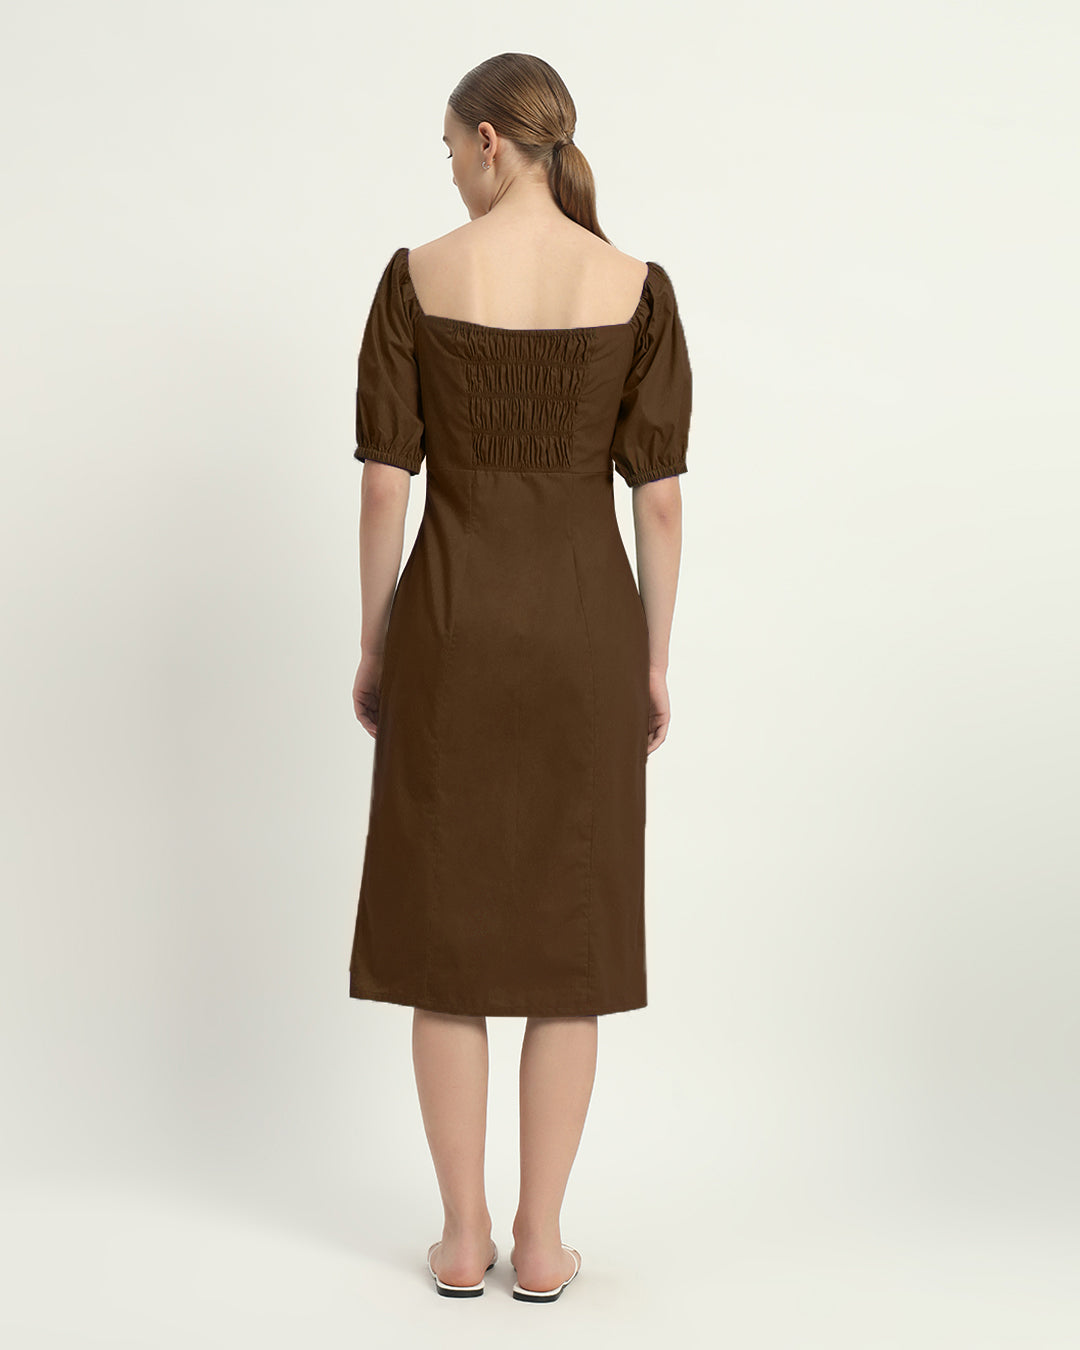 The Nutshell Erwin Cotton Dress